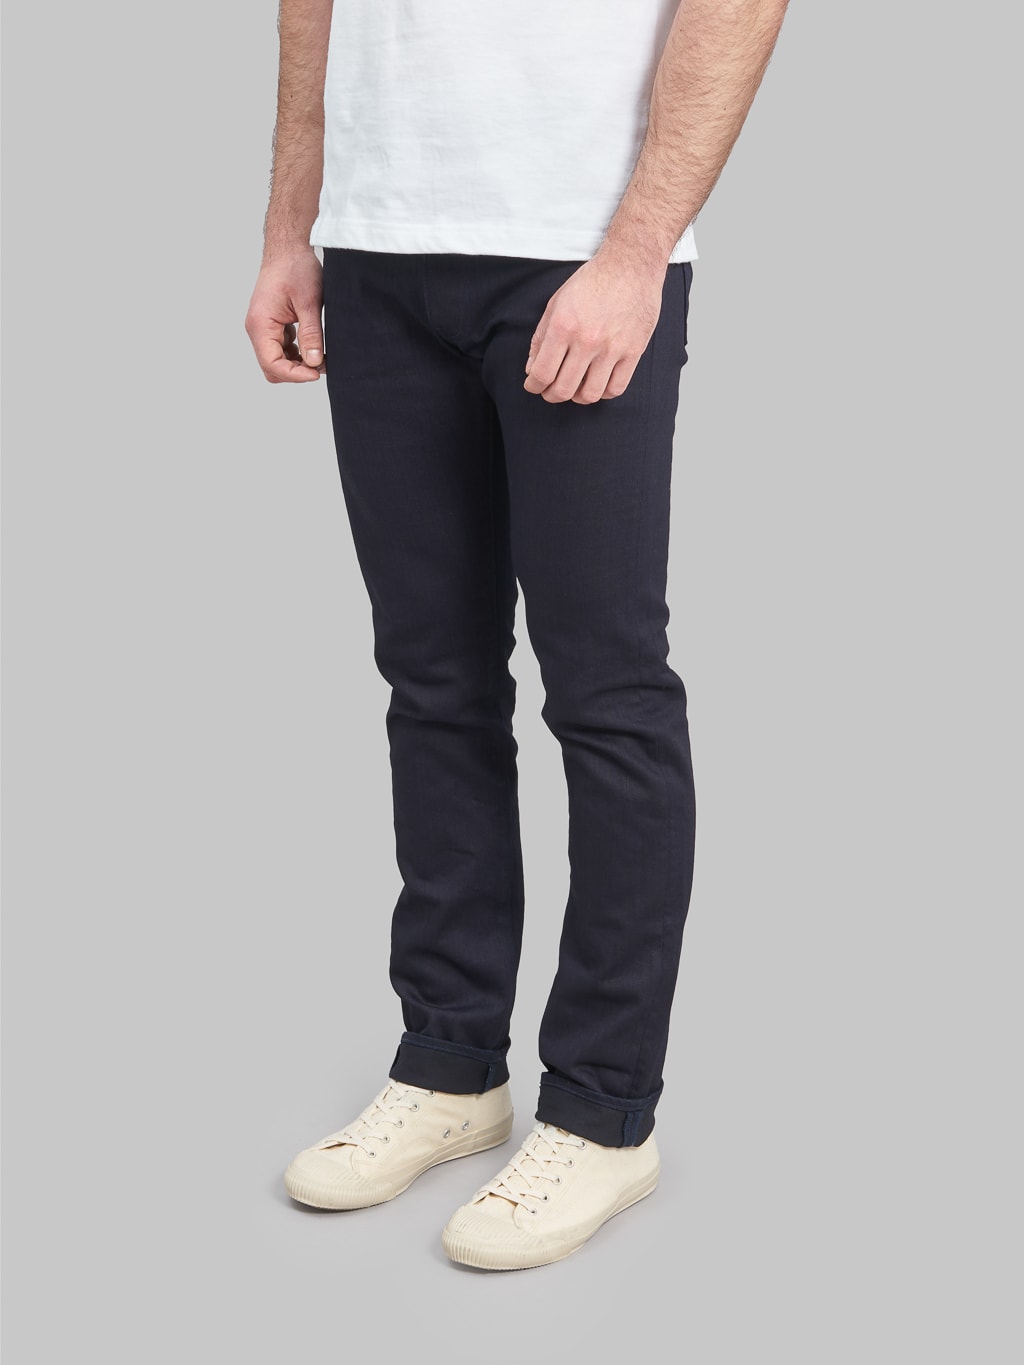 ONI Denim 526S-IDBK "High Power Stretch Denim" 11oz Semi Tight Straight Jeans